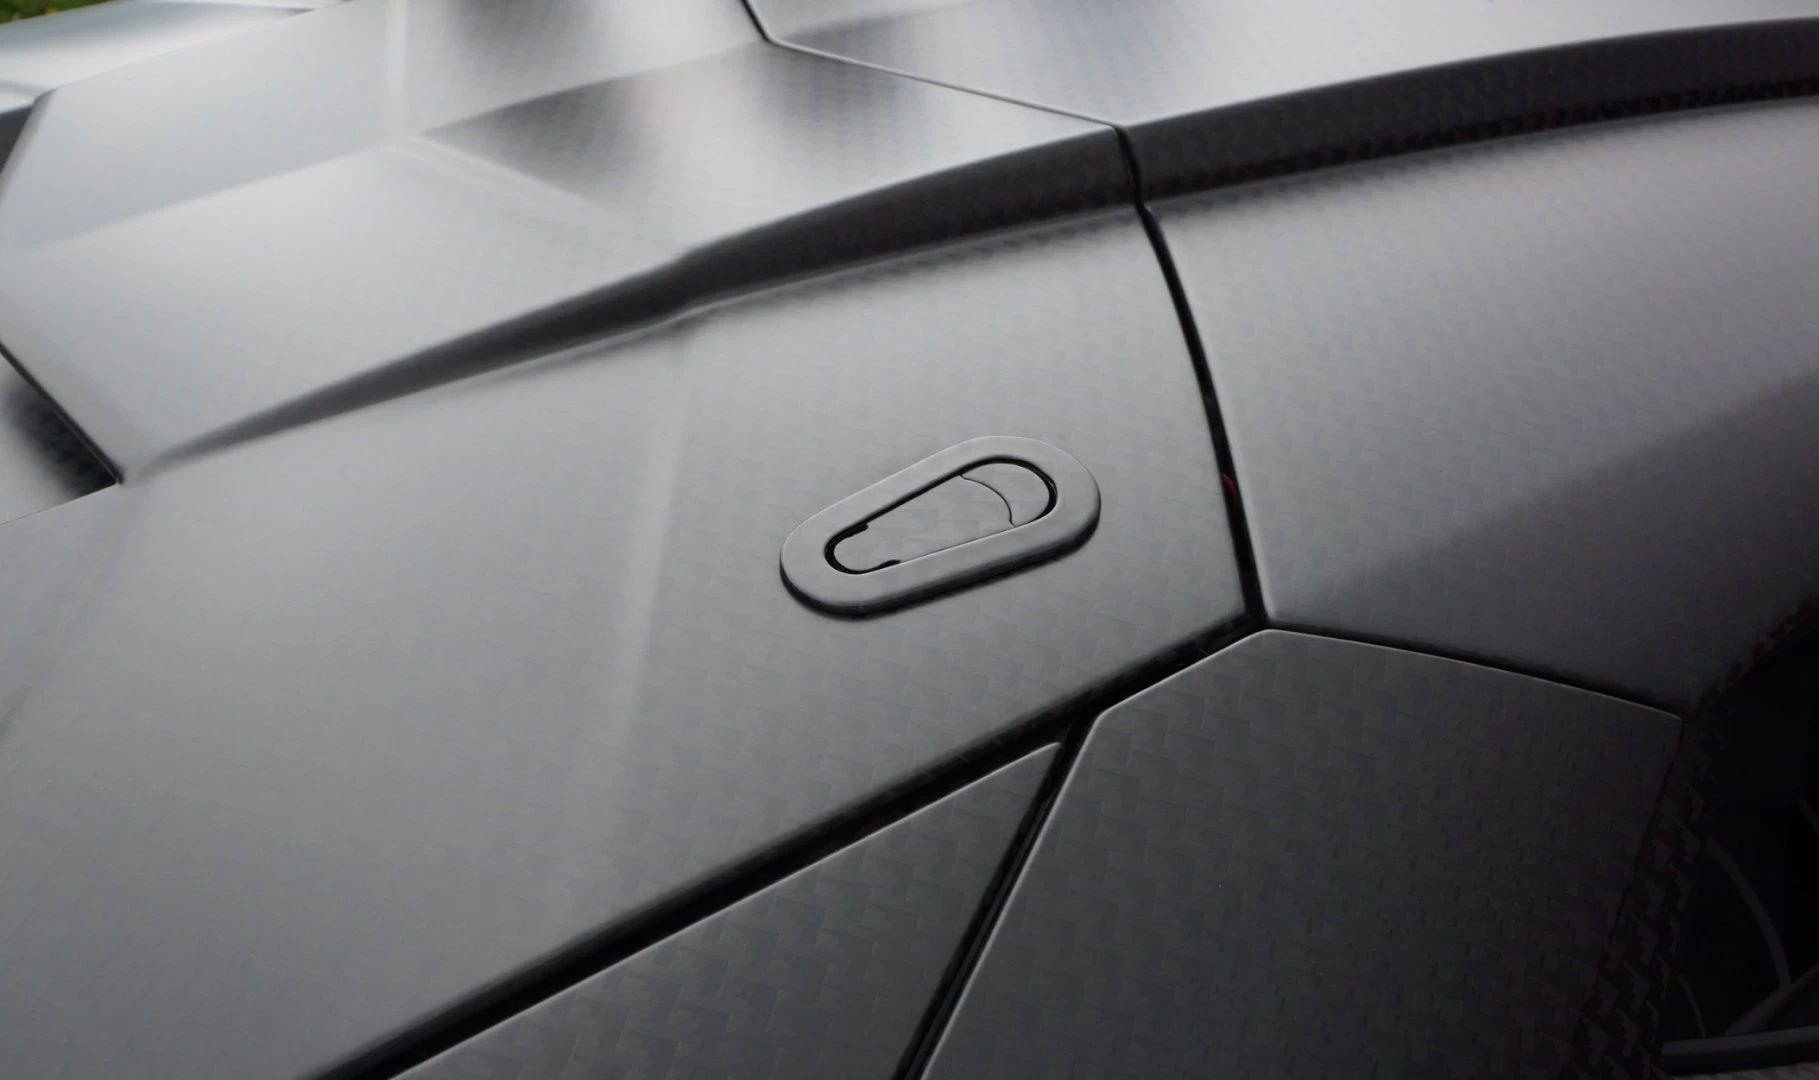 Check our price and buy Mansory Carbon Fiber Body kit set for Lamborghini Aventador Carbonado GT